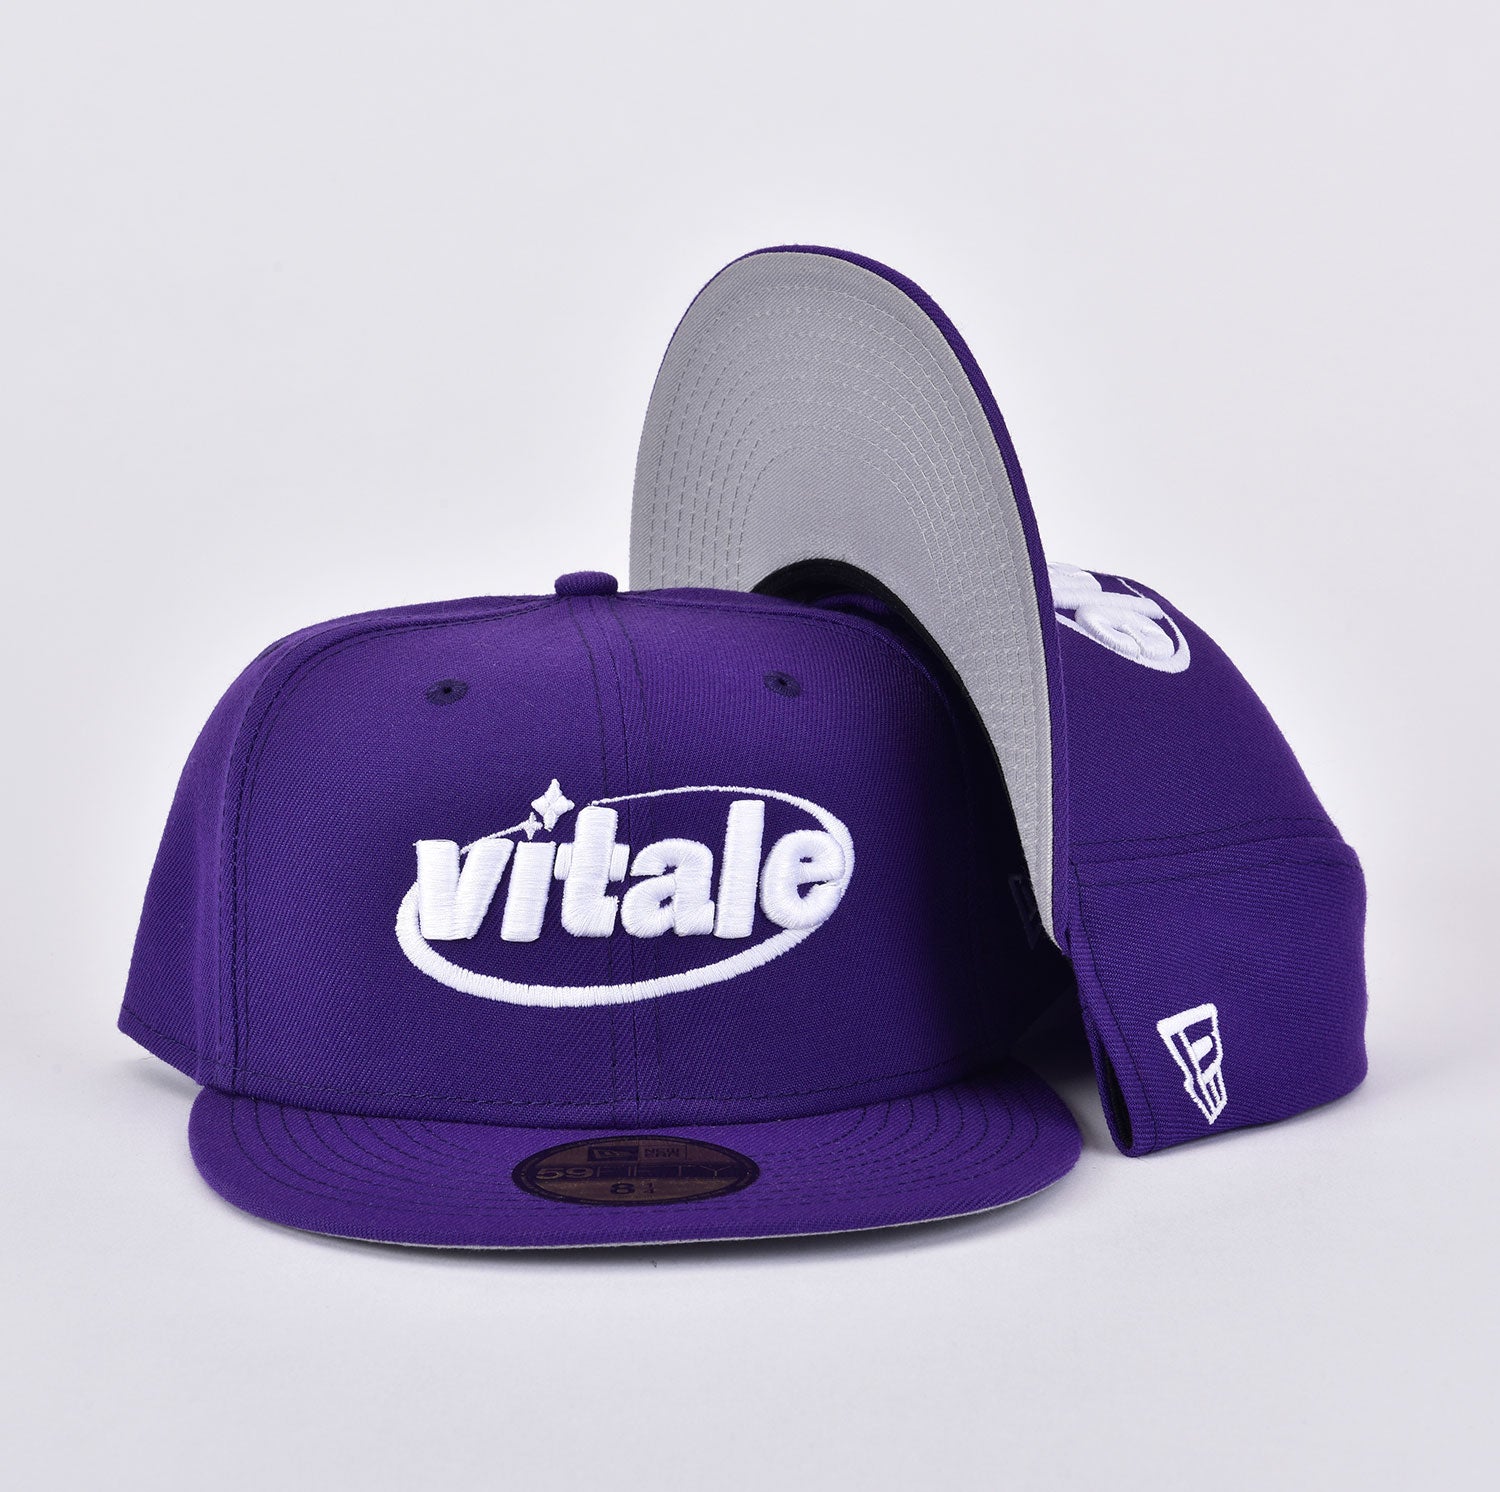 VITALE 59FIFTY NEW ERA FITTED HAT IN PURPLE – VITALE LLC